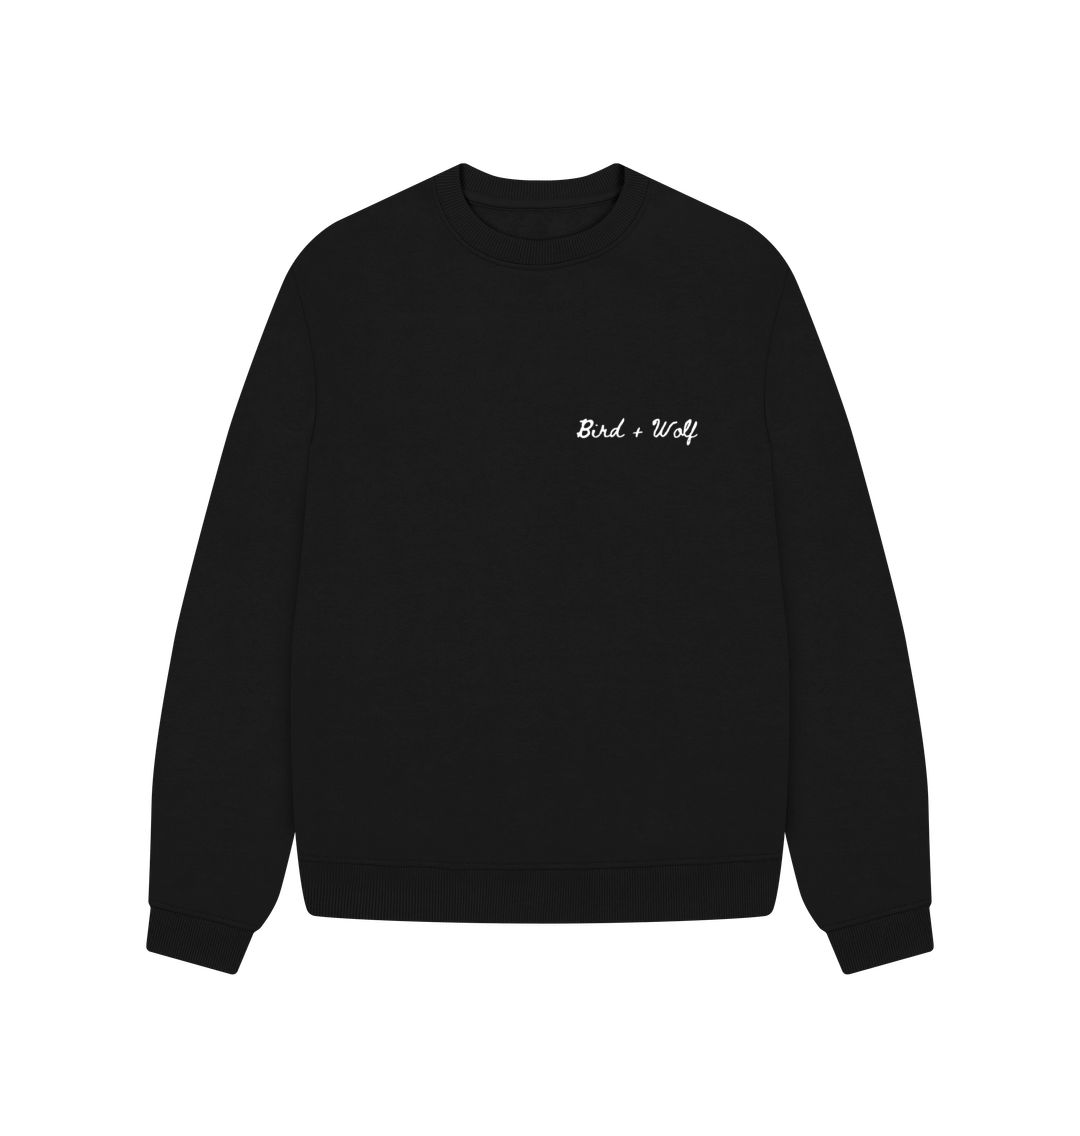 Black Bird + Wolf Oversized Sweatshirt (White Lettering)